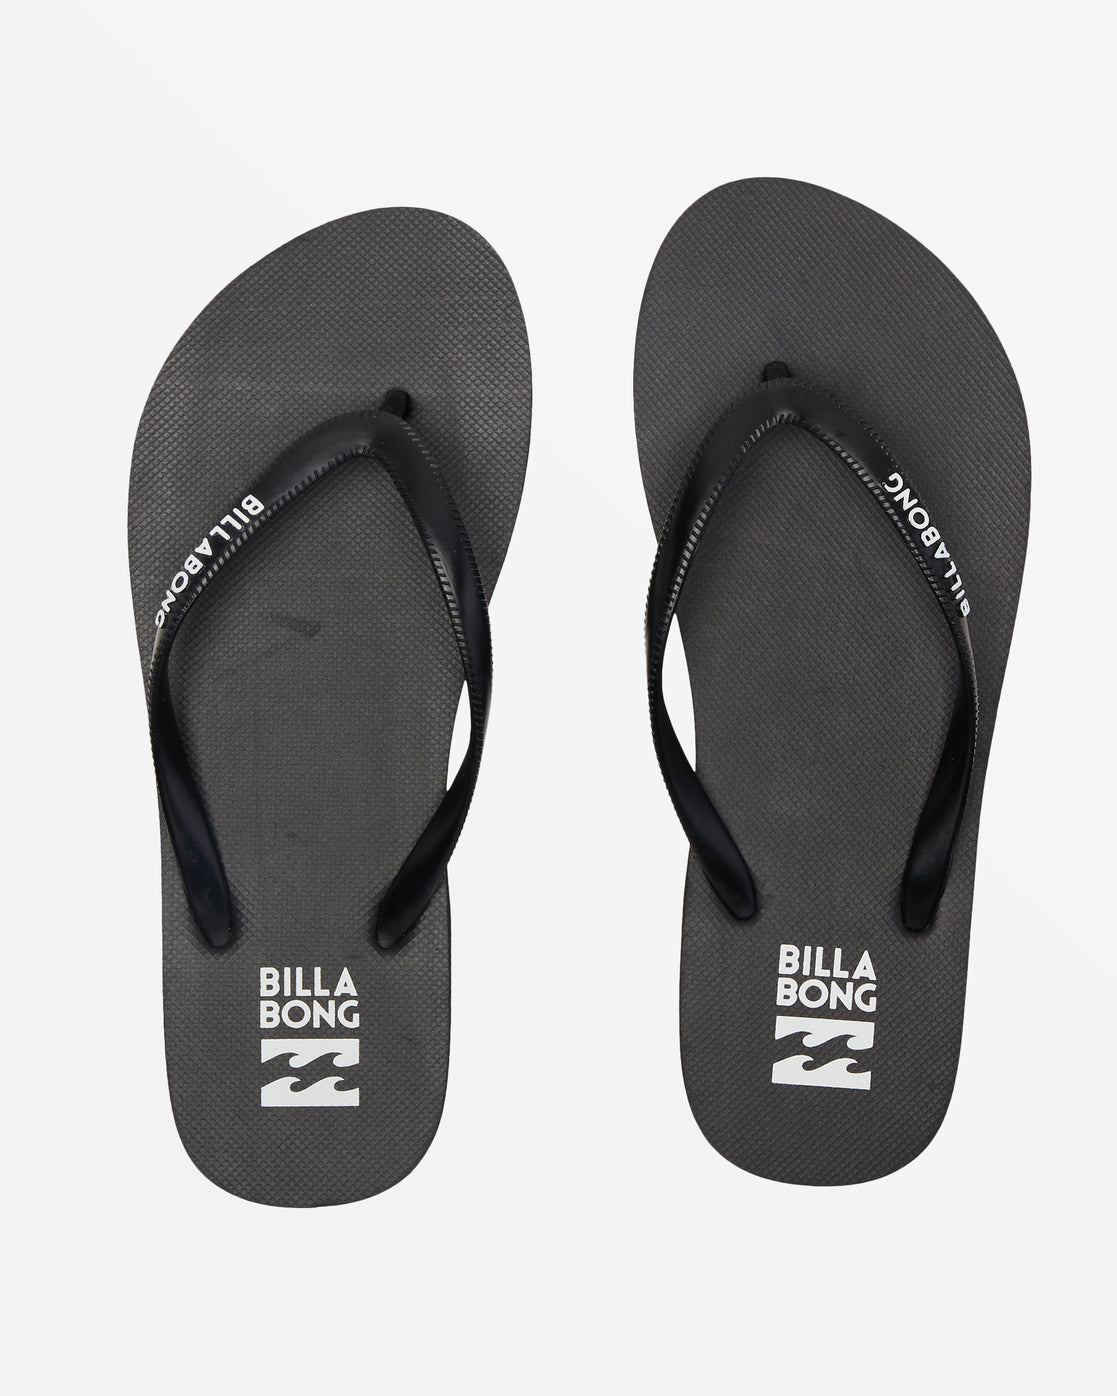 Dama Rubber Flip Flop Sandals - Black/White